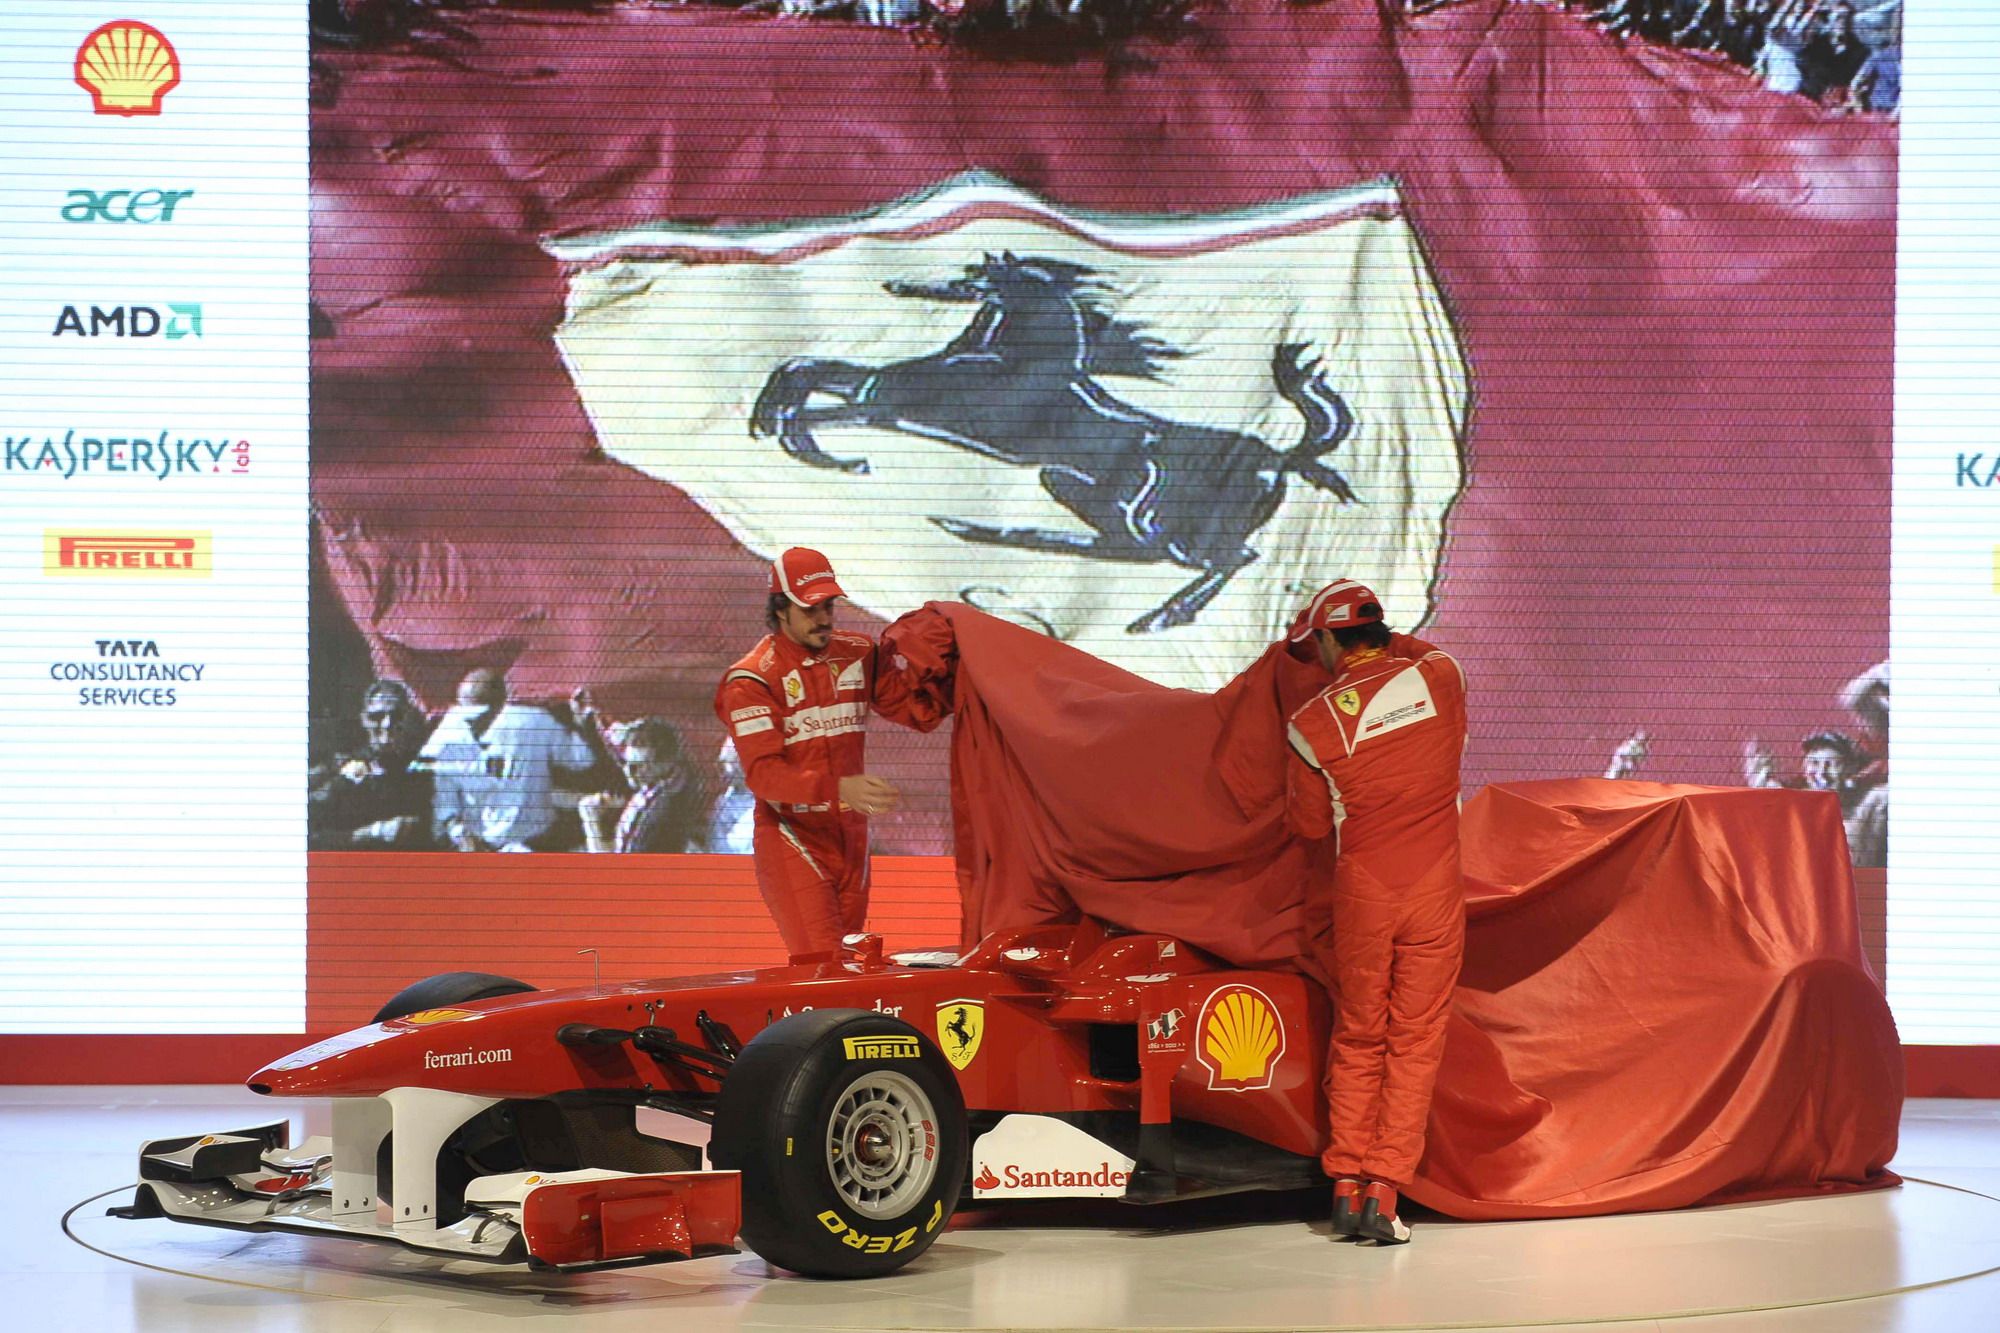 2011 Ferrari 150° Italia Formula 1 Car 